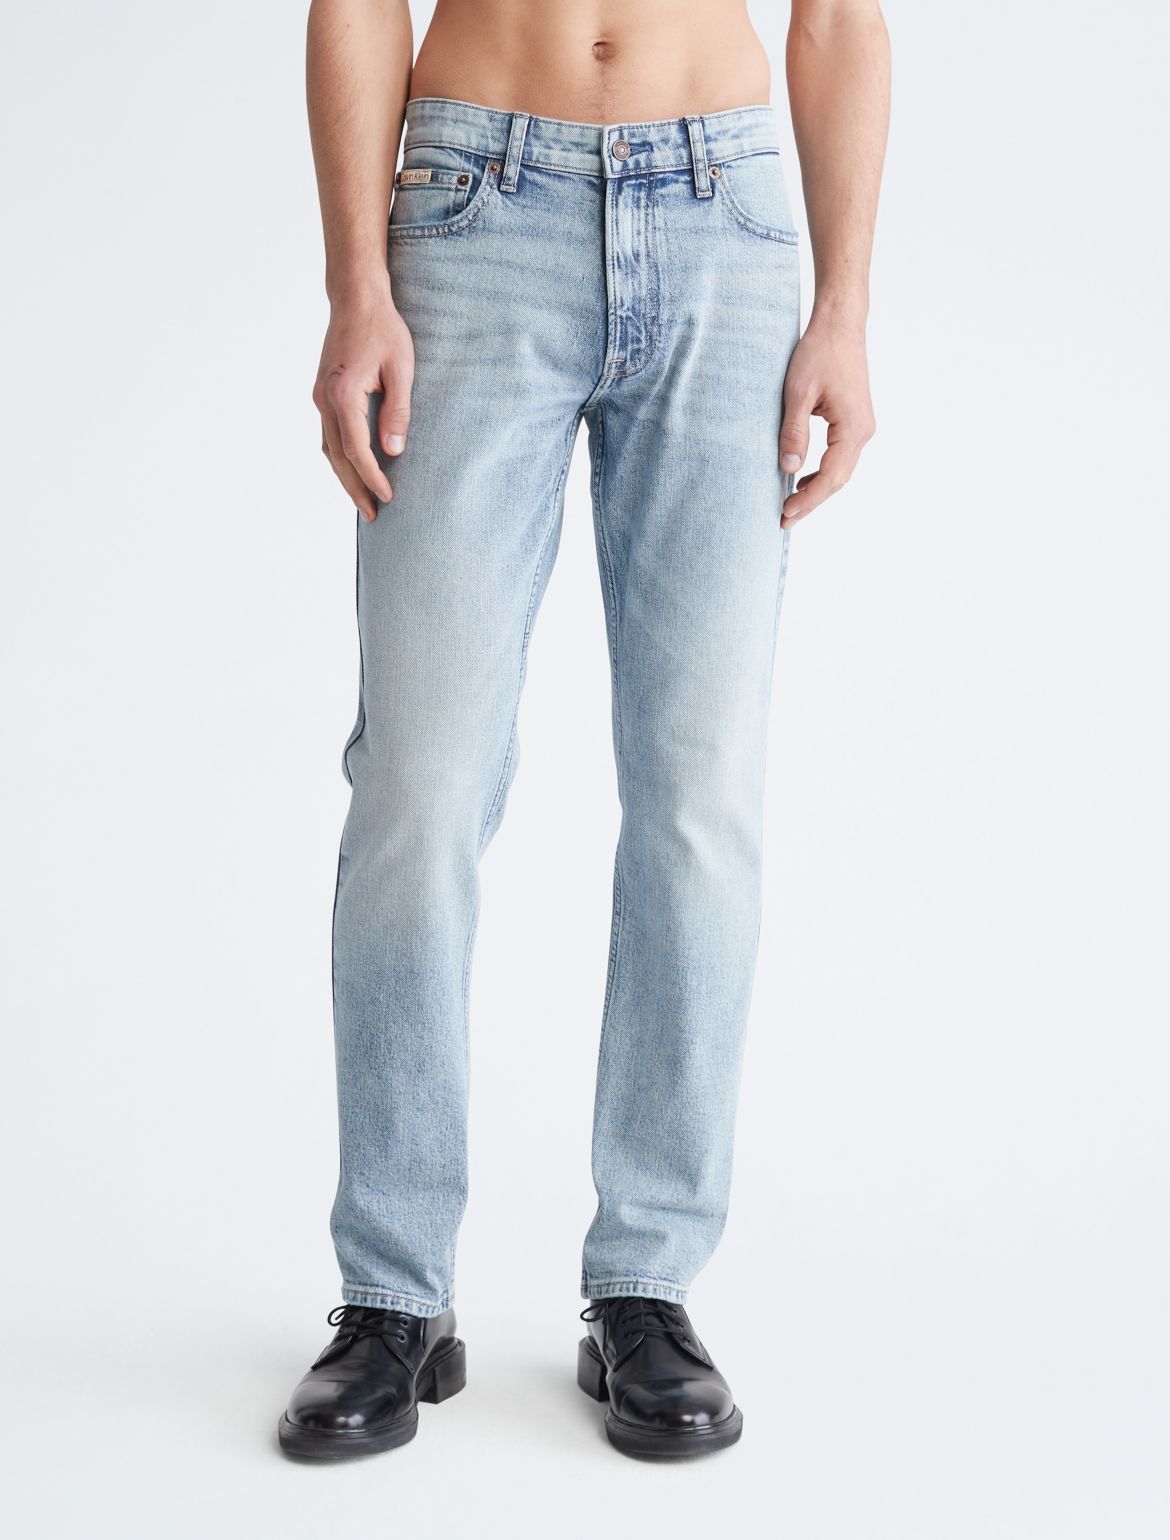 Calvin Klein Men's Slim Fit Jean - Blue - 36W x 30L